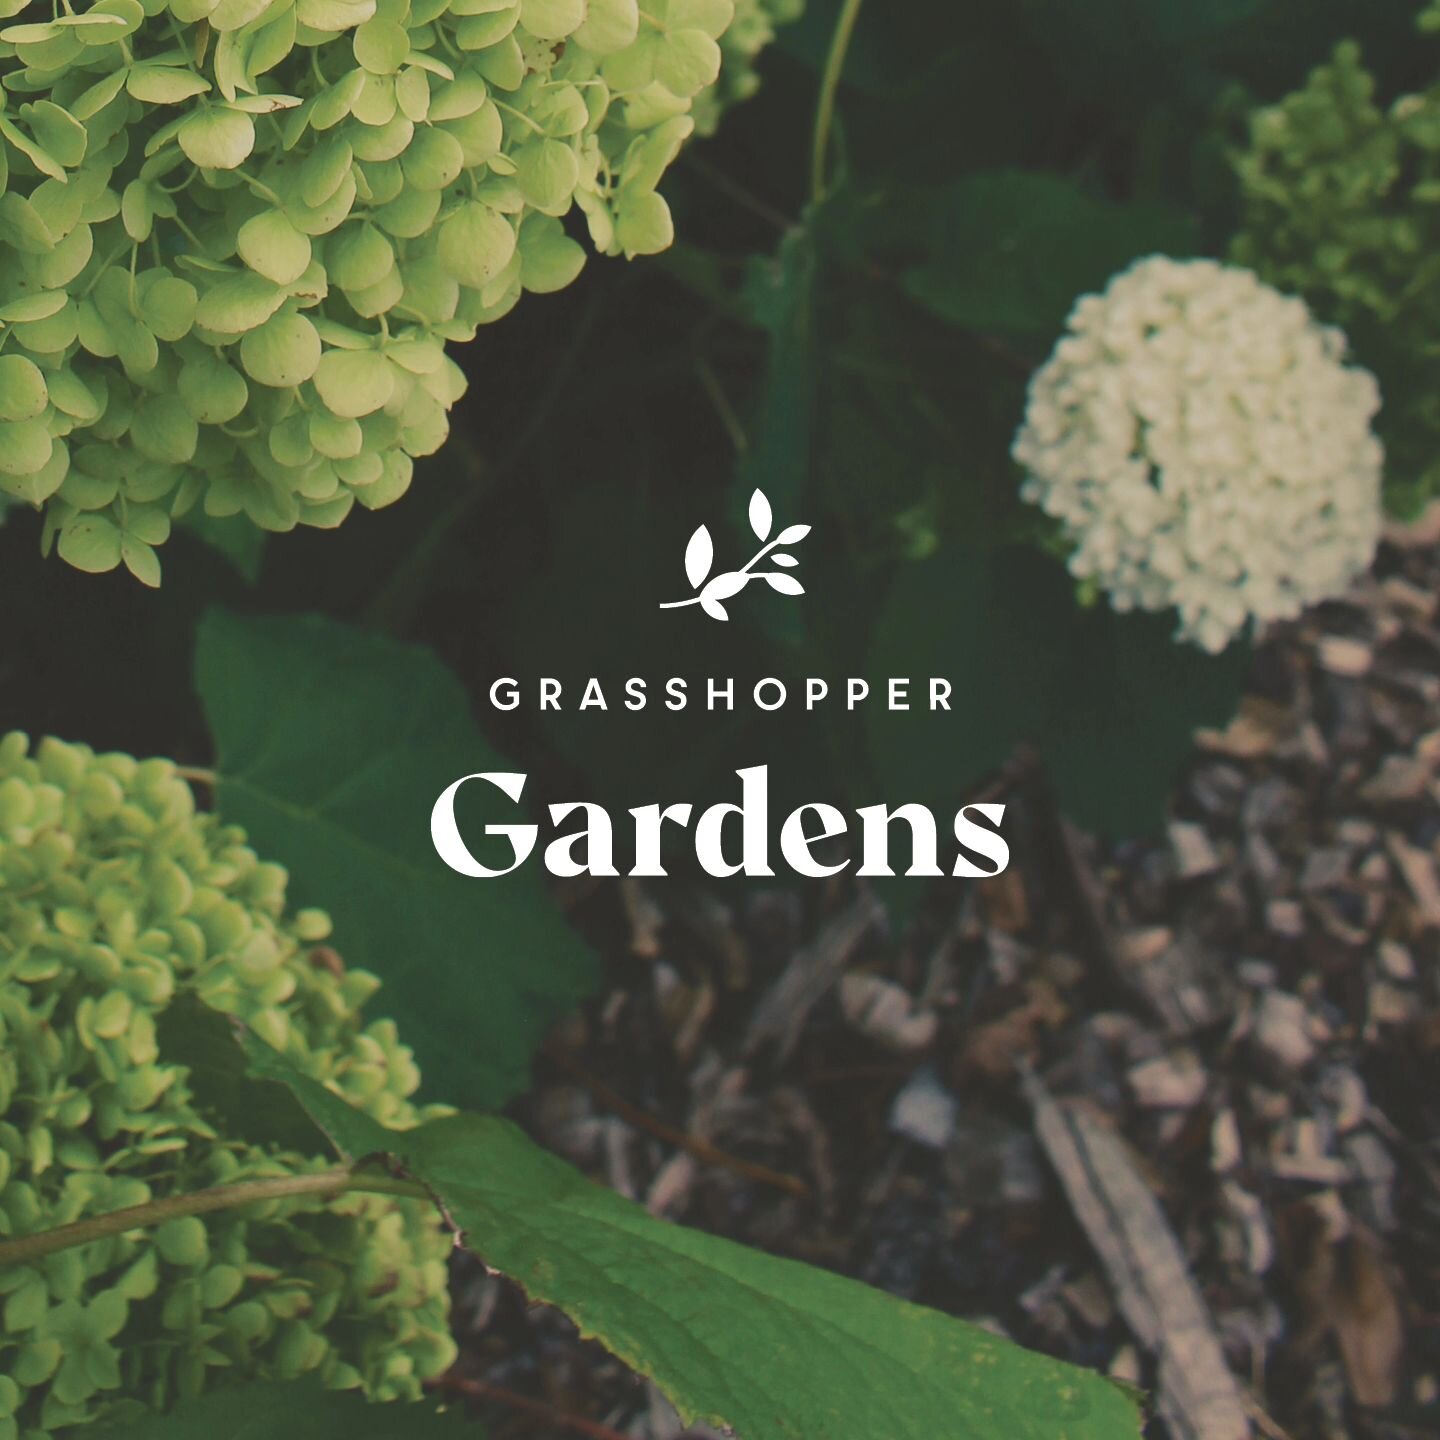 Www.grasshoppergardens.co.nz

#commerciallandscaping #commercialgardening #gardensnz #gardens #gardening #gardenlove #gardenersworld